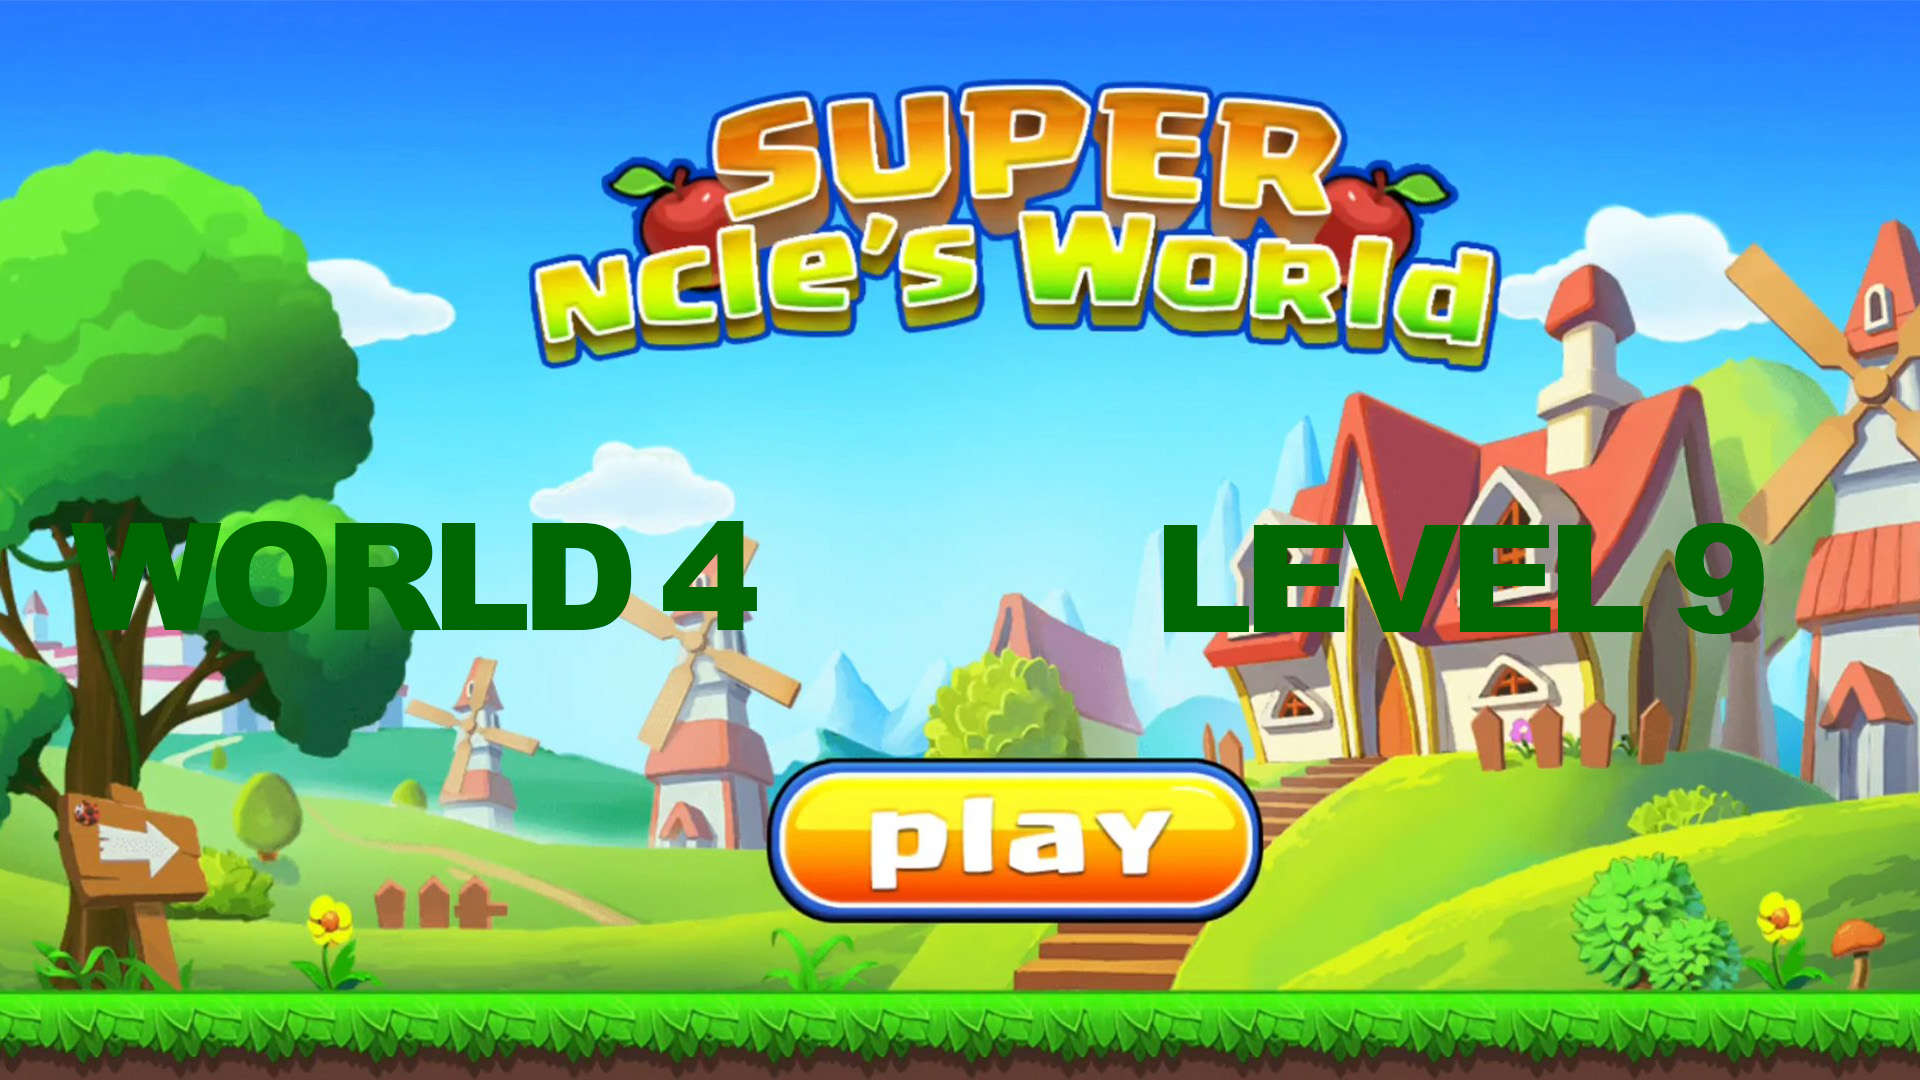 Super ncle's  World 4. Level 9.